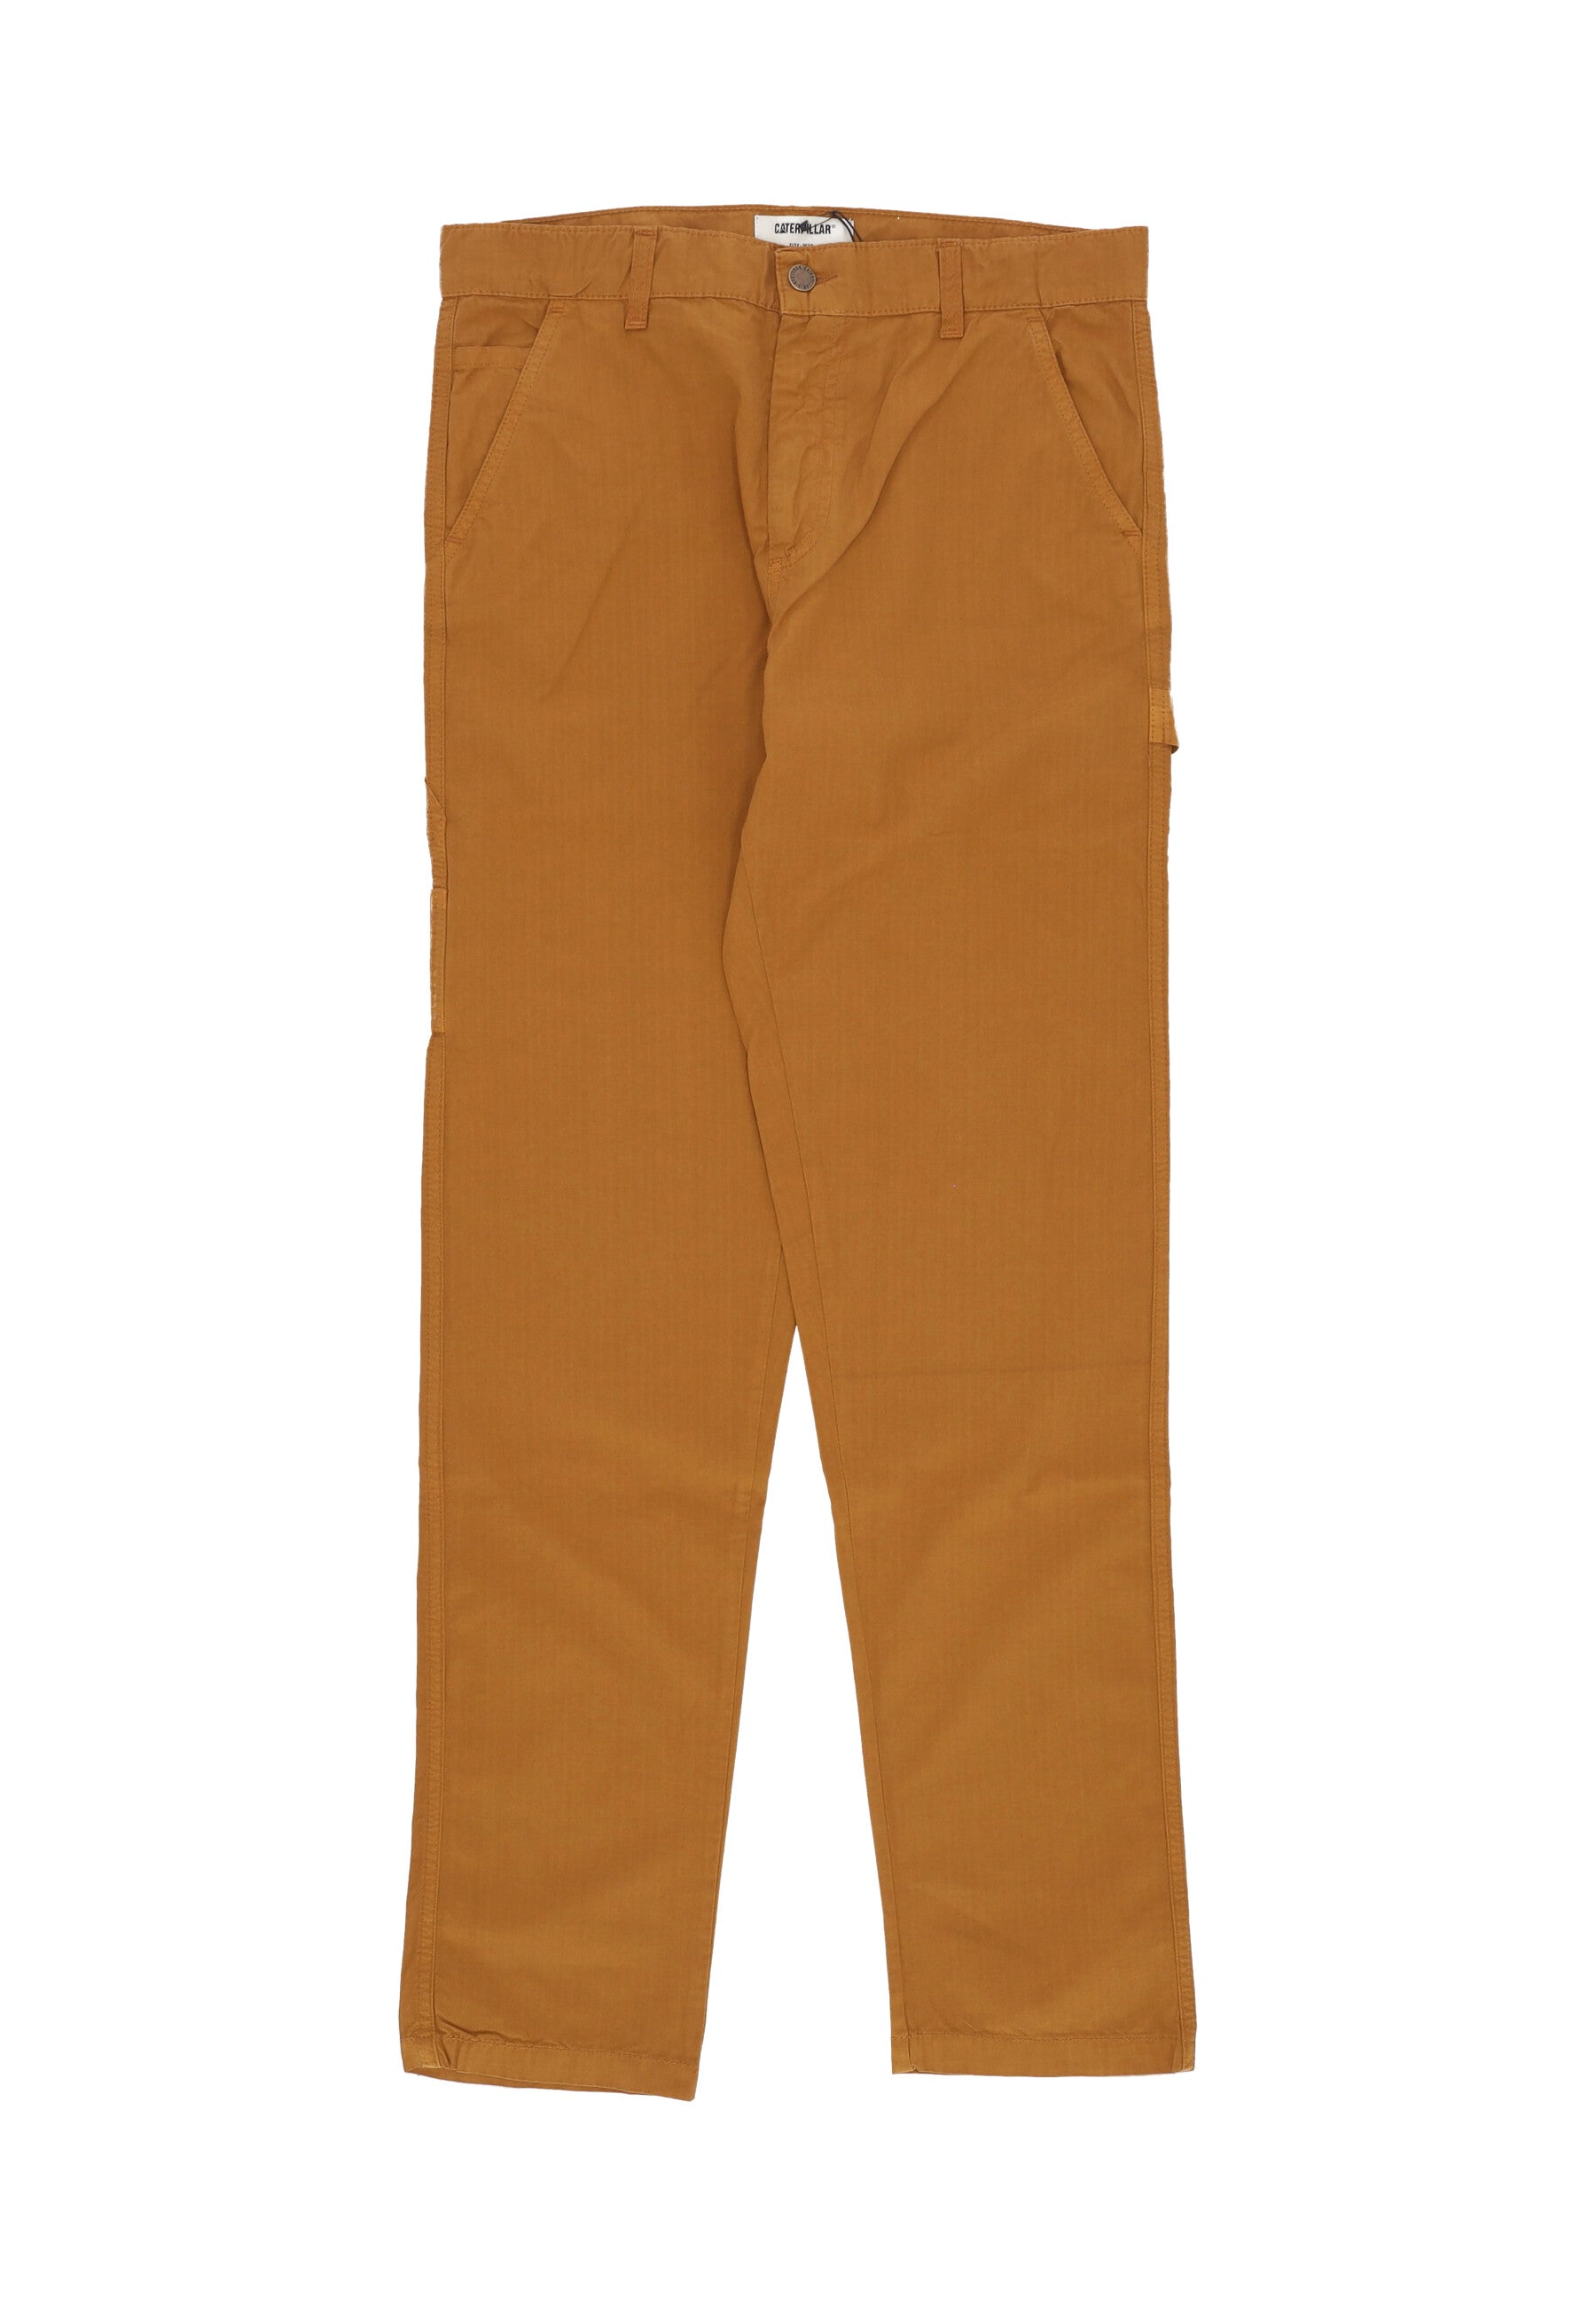 Pantalone Lungo Uomo Ripstop Carpenter Pant Cathay Spice 6080148